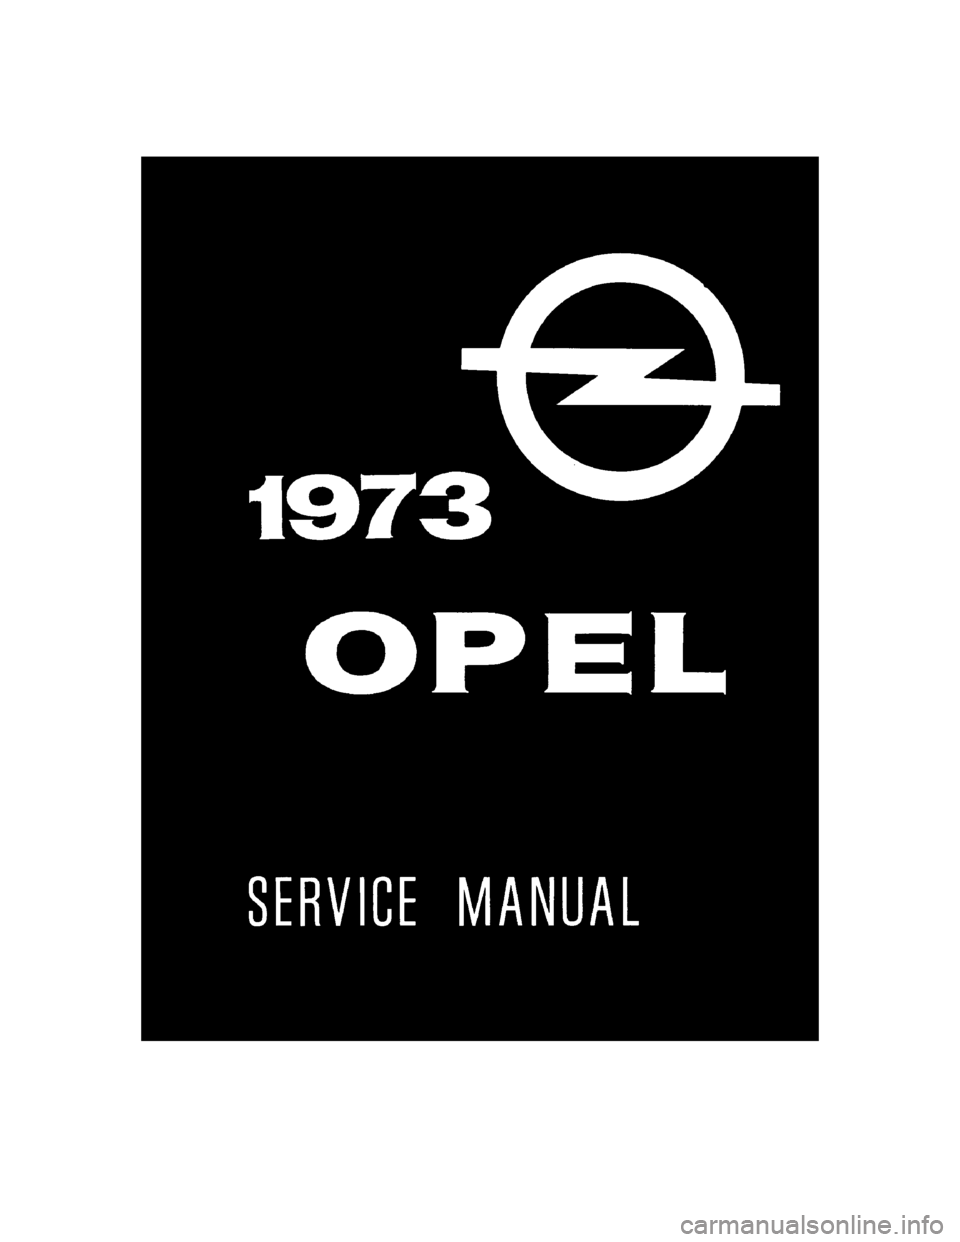 OPEL 1900 1973  Service Manual 